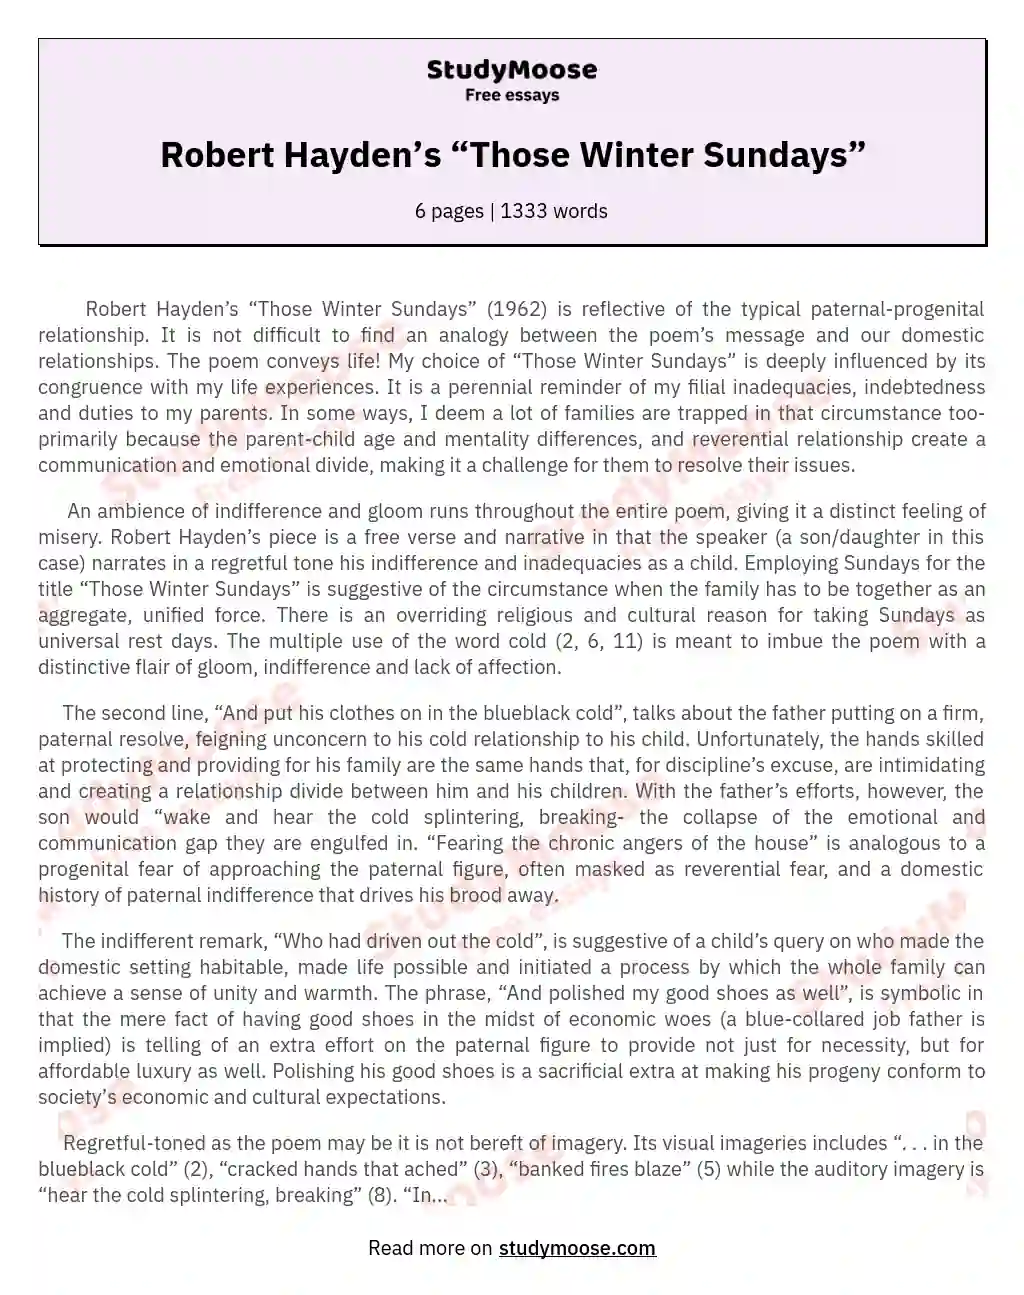 Robert Hayden’s “Those Winter Sundays” essay